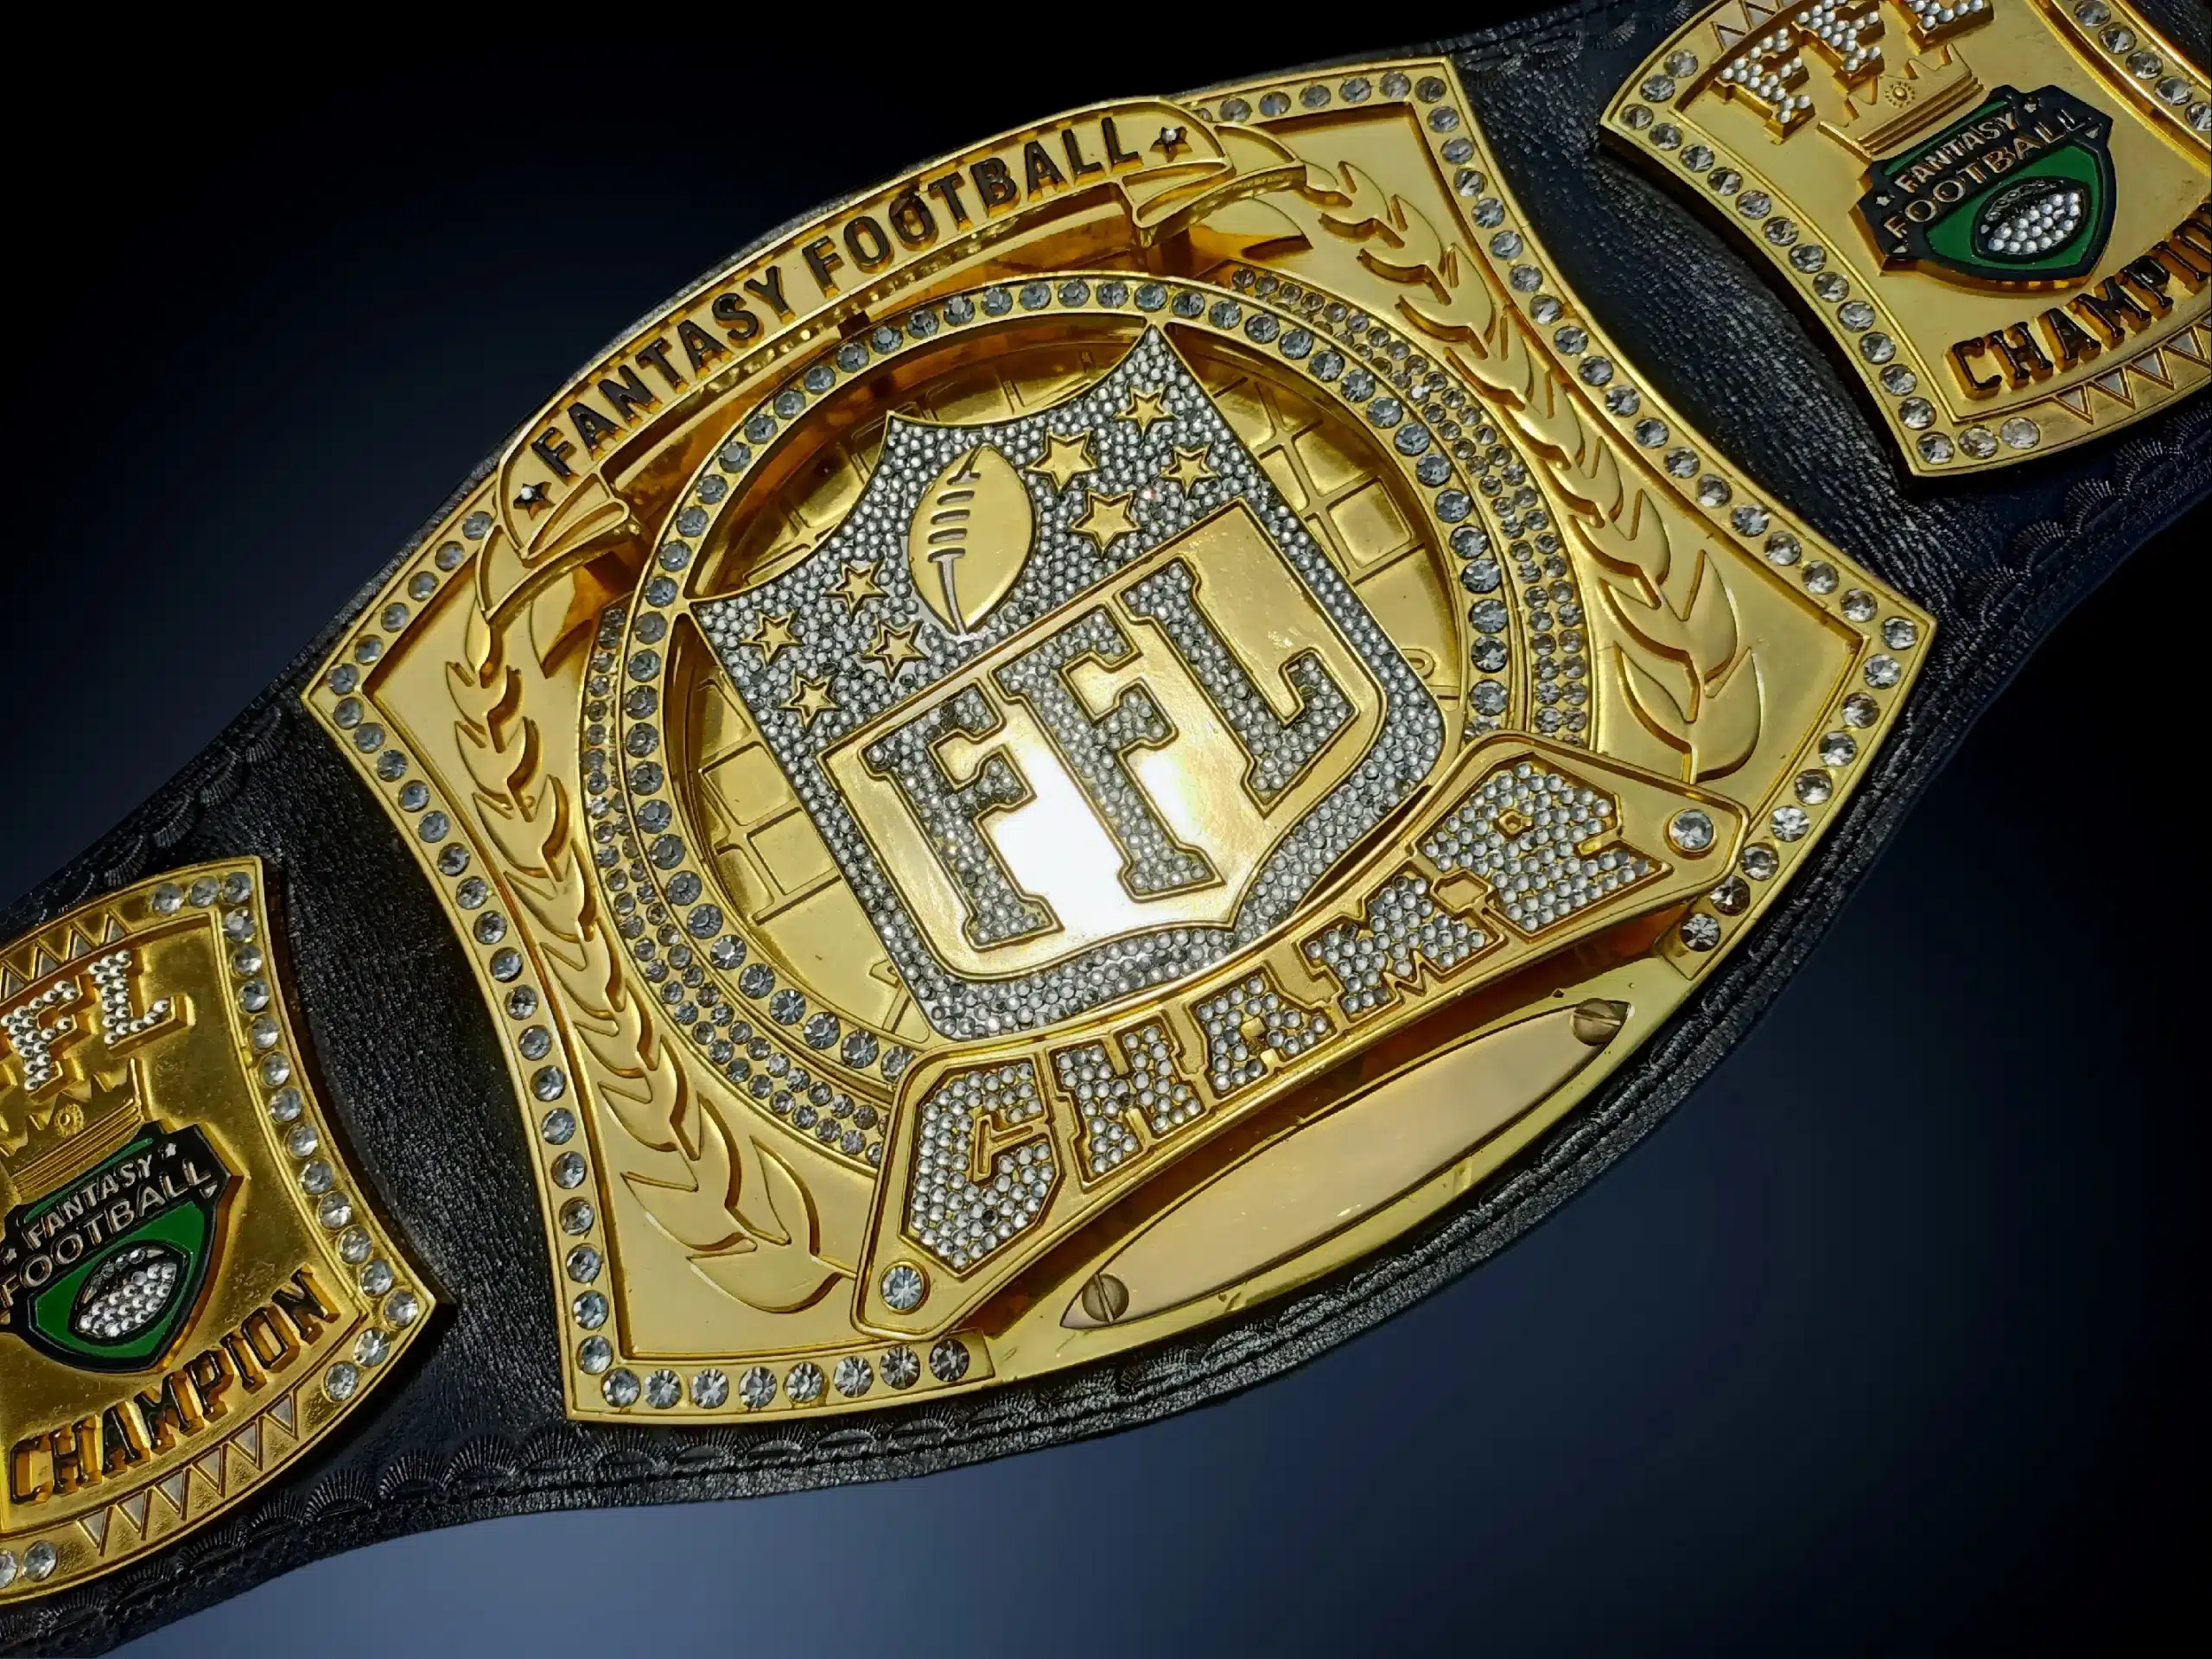 FFL Championship Belt